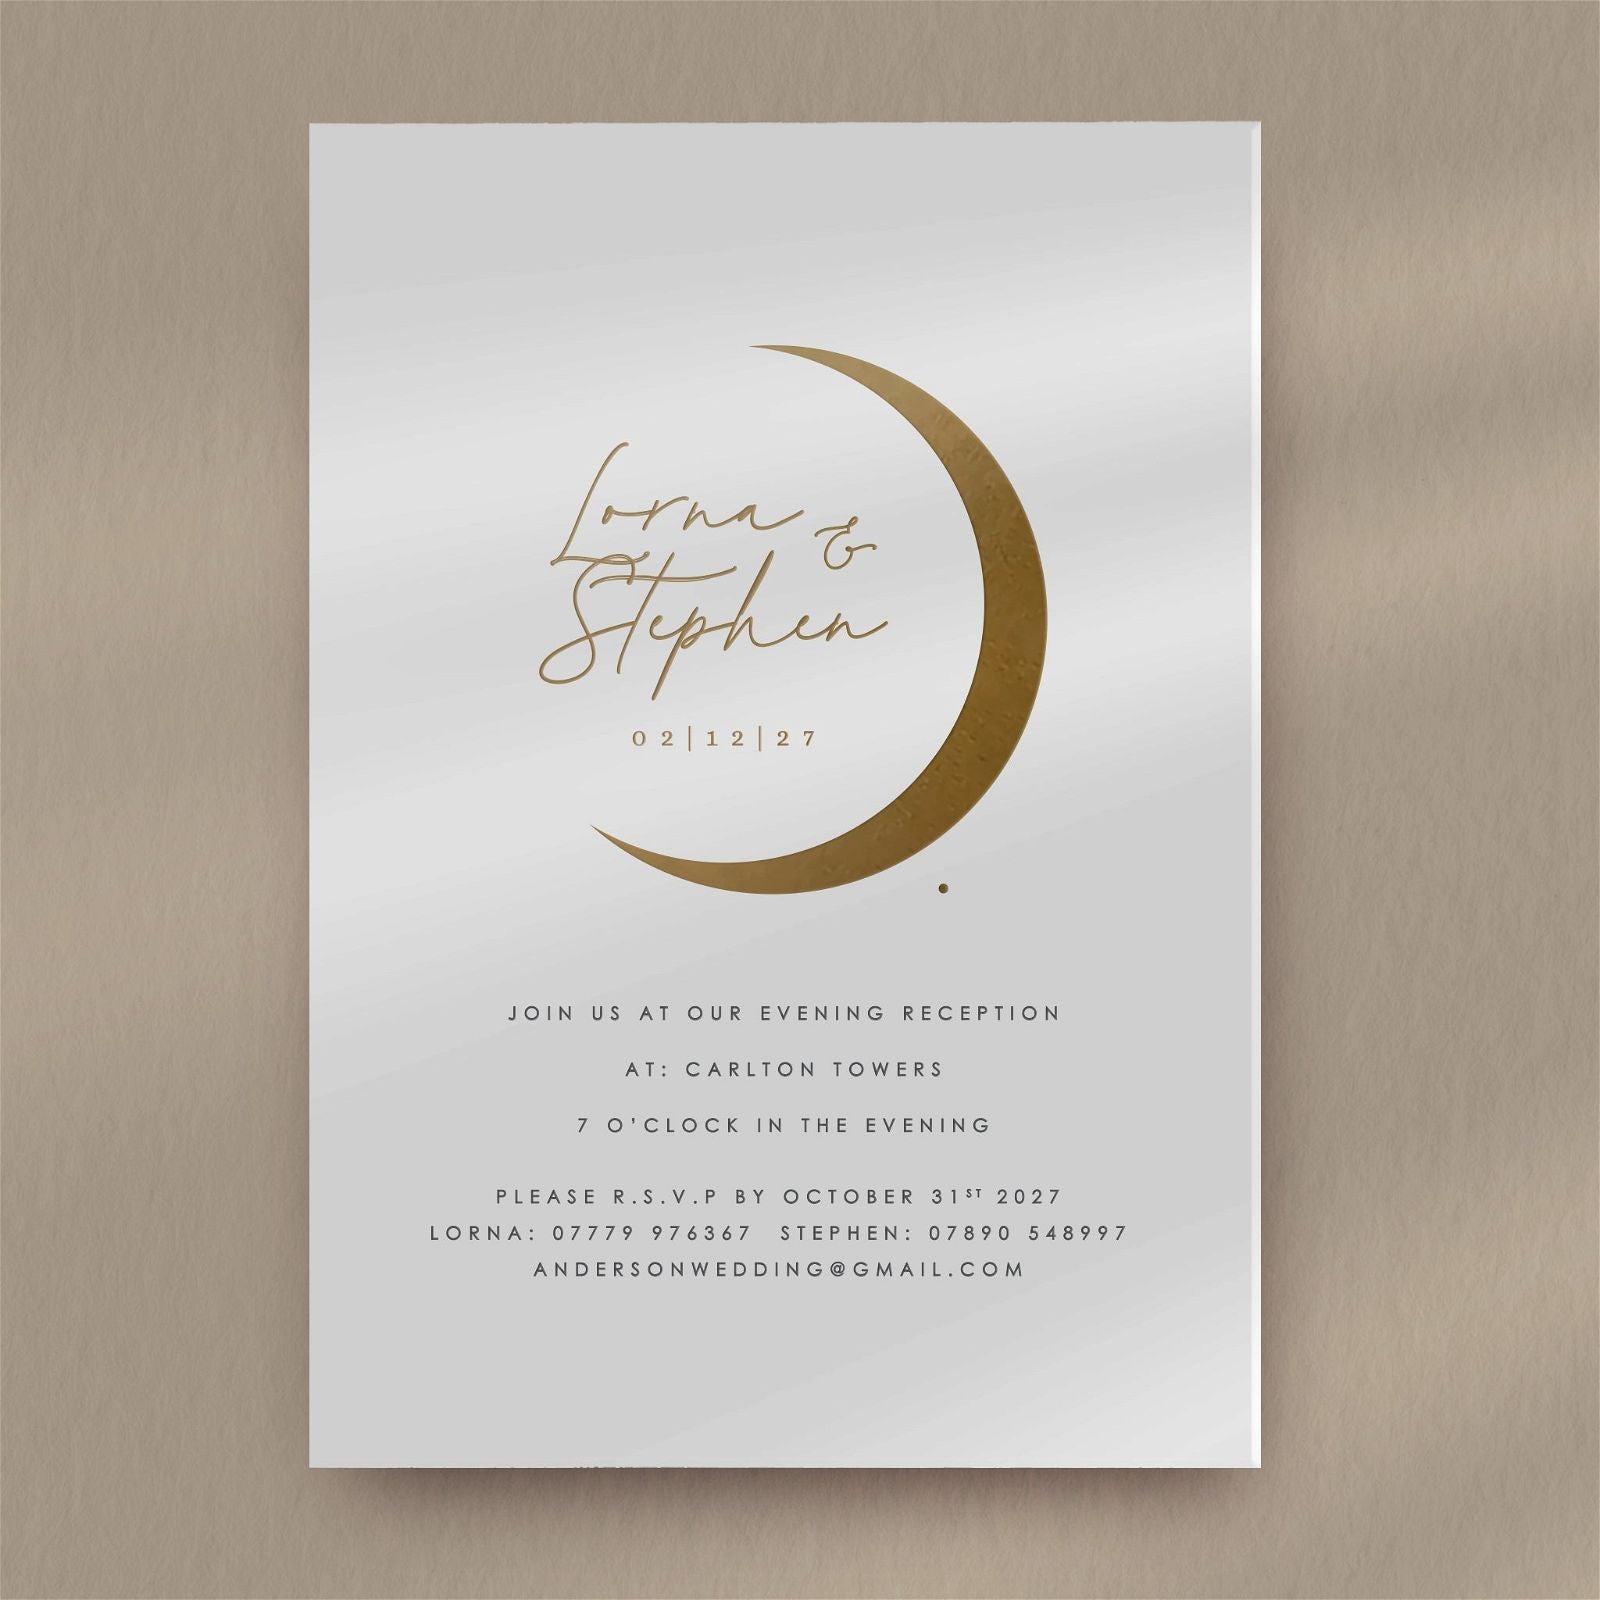 Lorna Evening Invitation  Ivy and Gold Wedding Stationery   